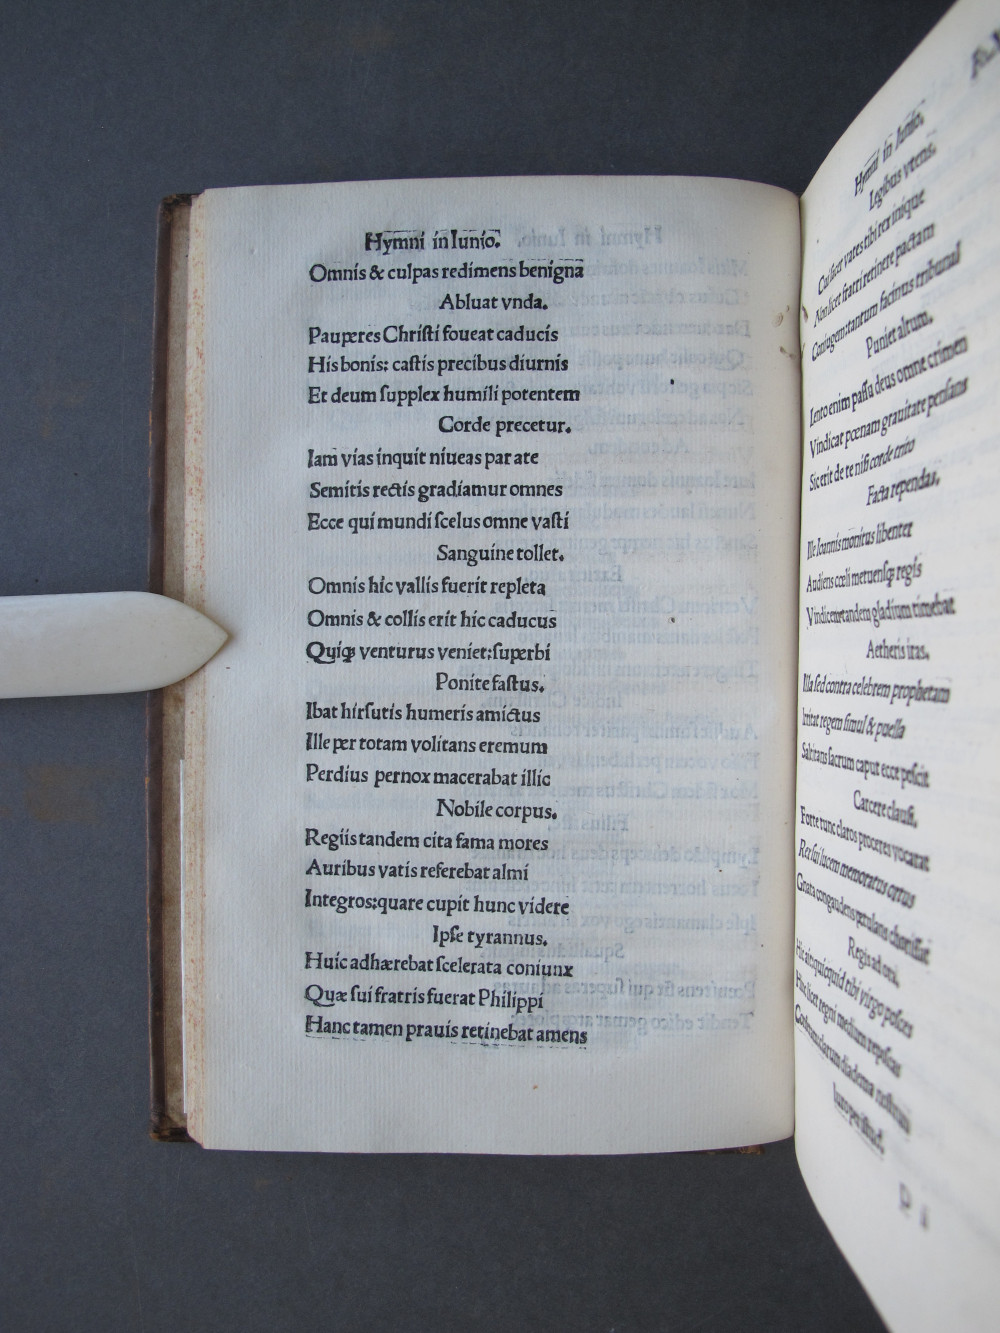 Folio 25 verso